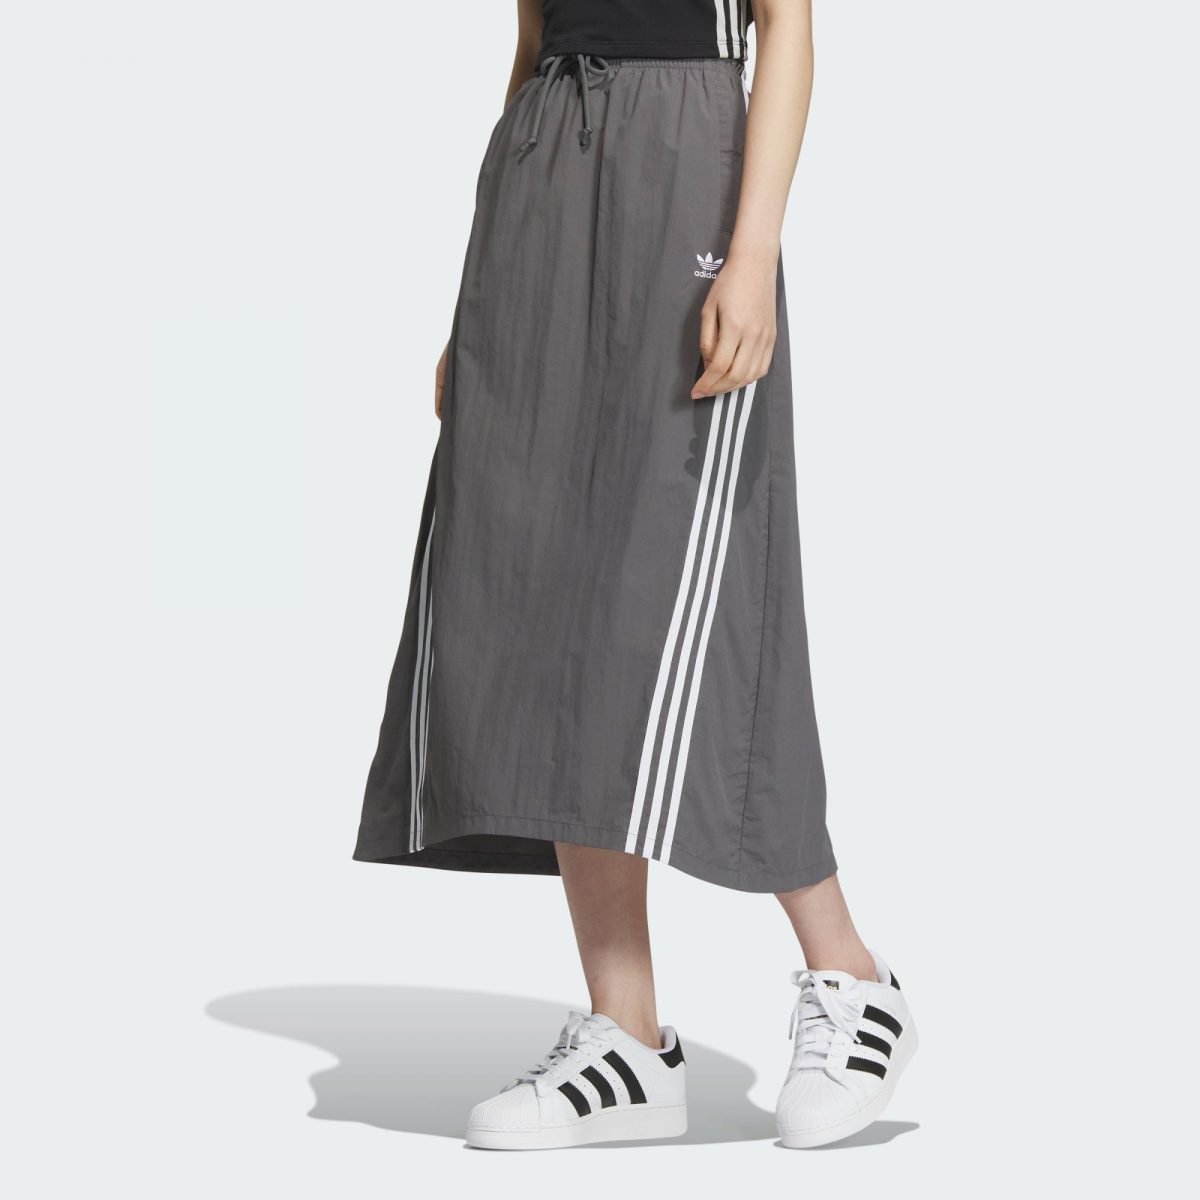 Женская юбка adidas 3S PARACH SKIRT фото